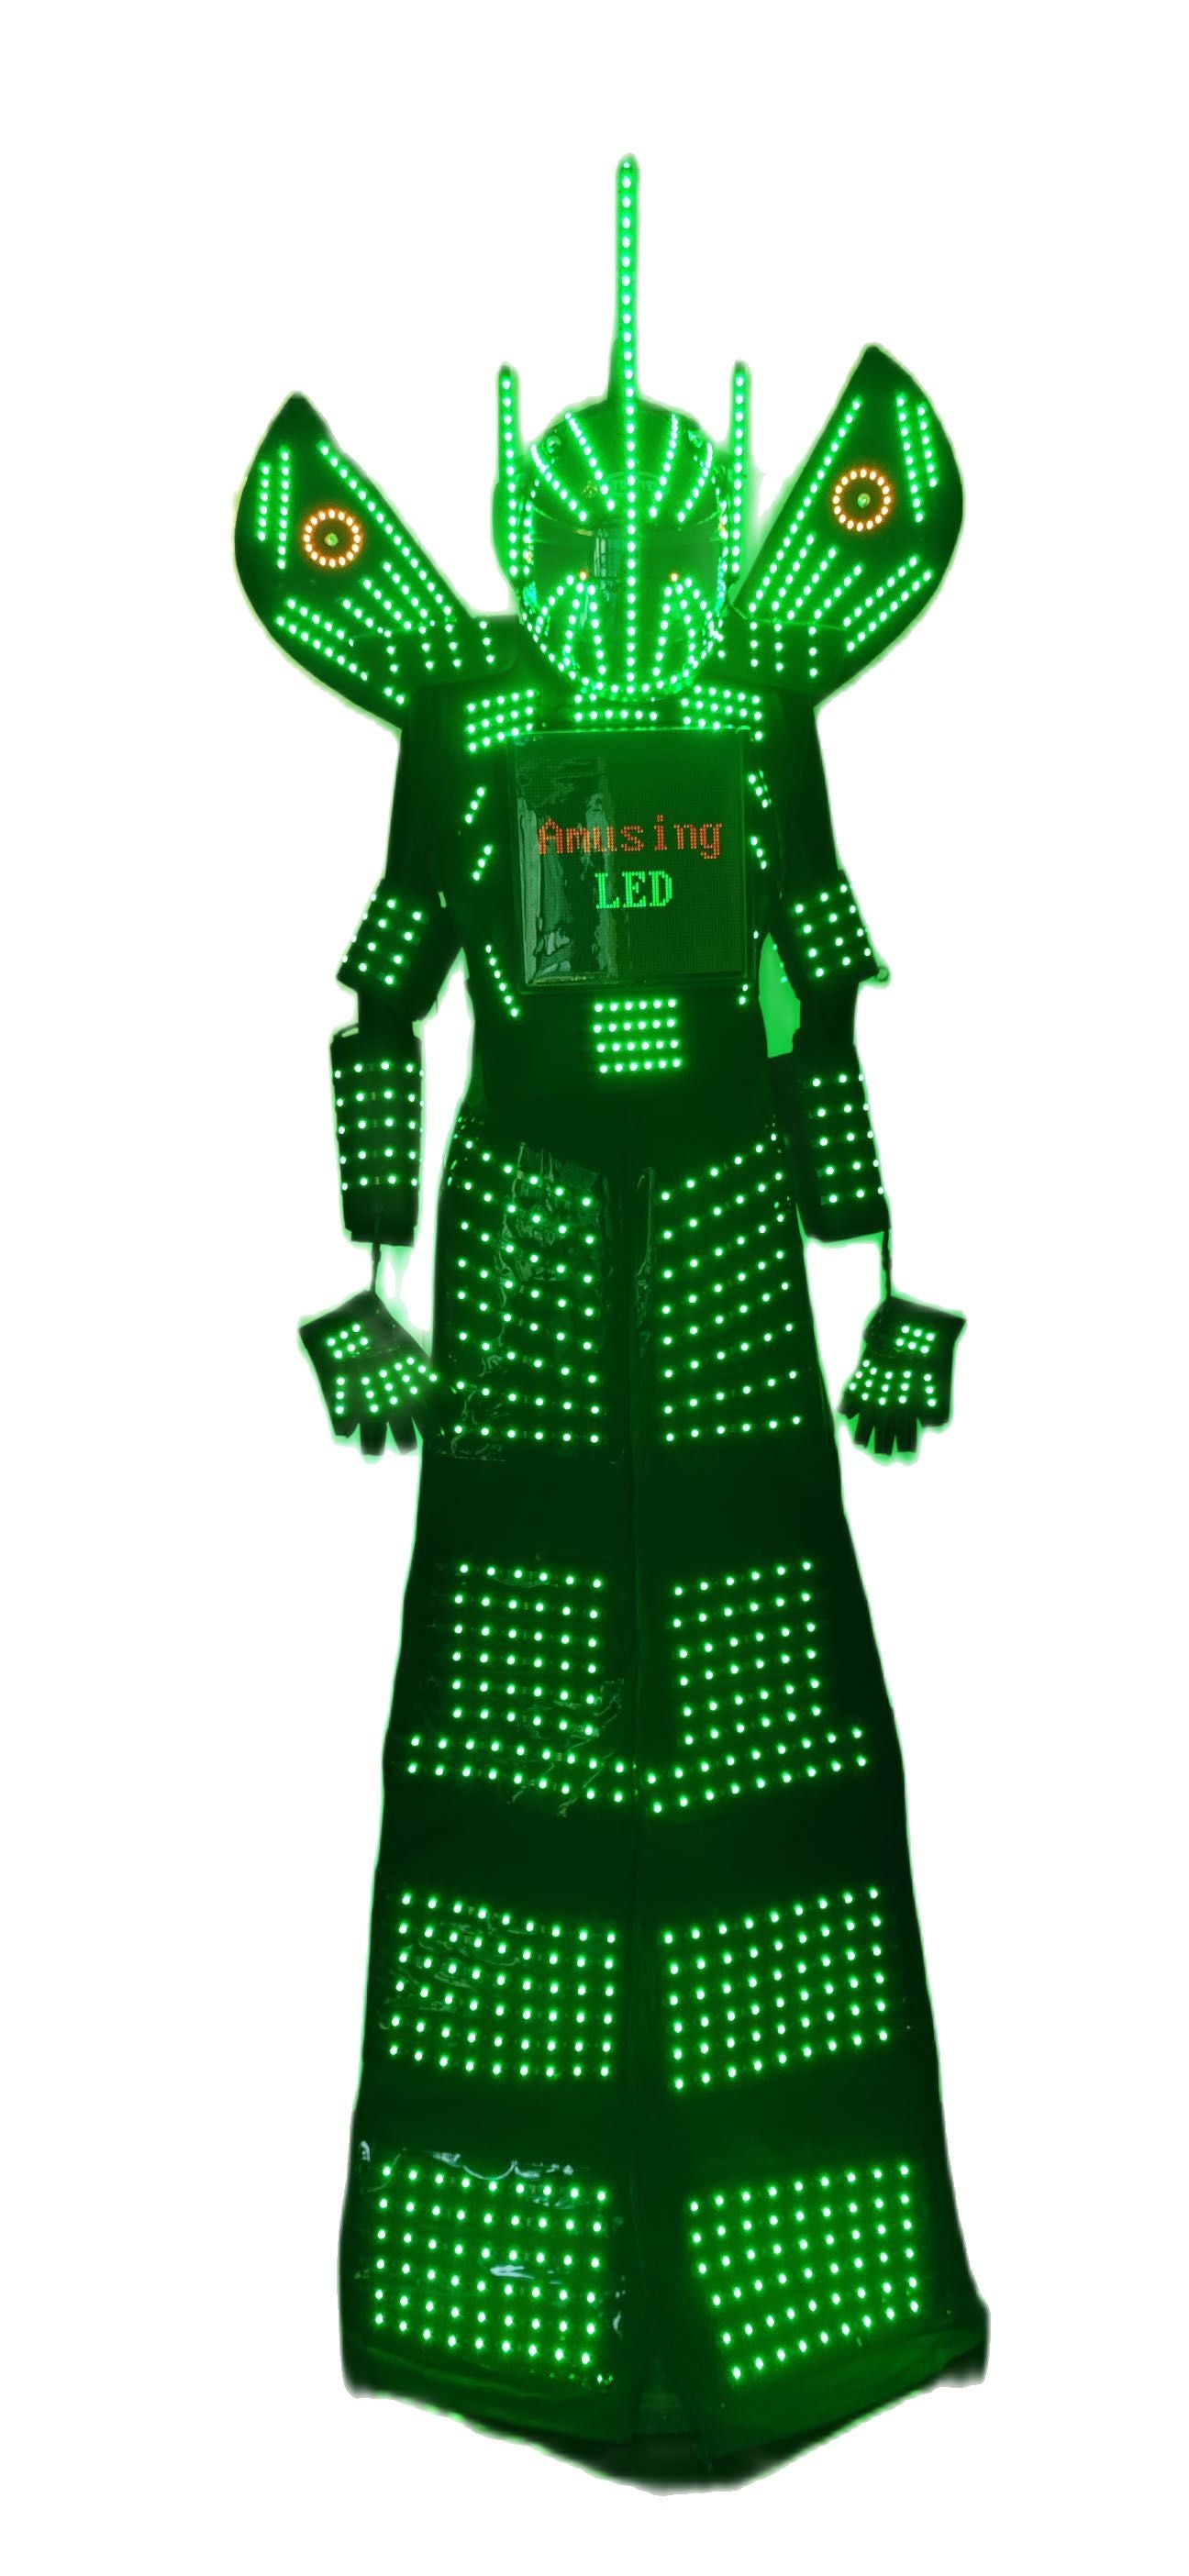 LED Robot Stilts Walker Costume with screen